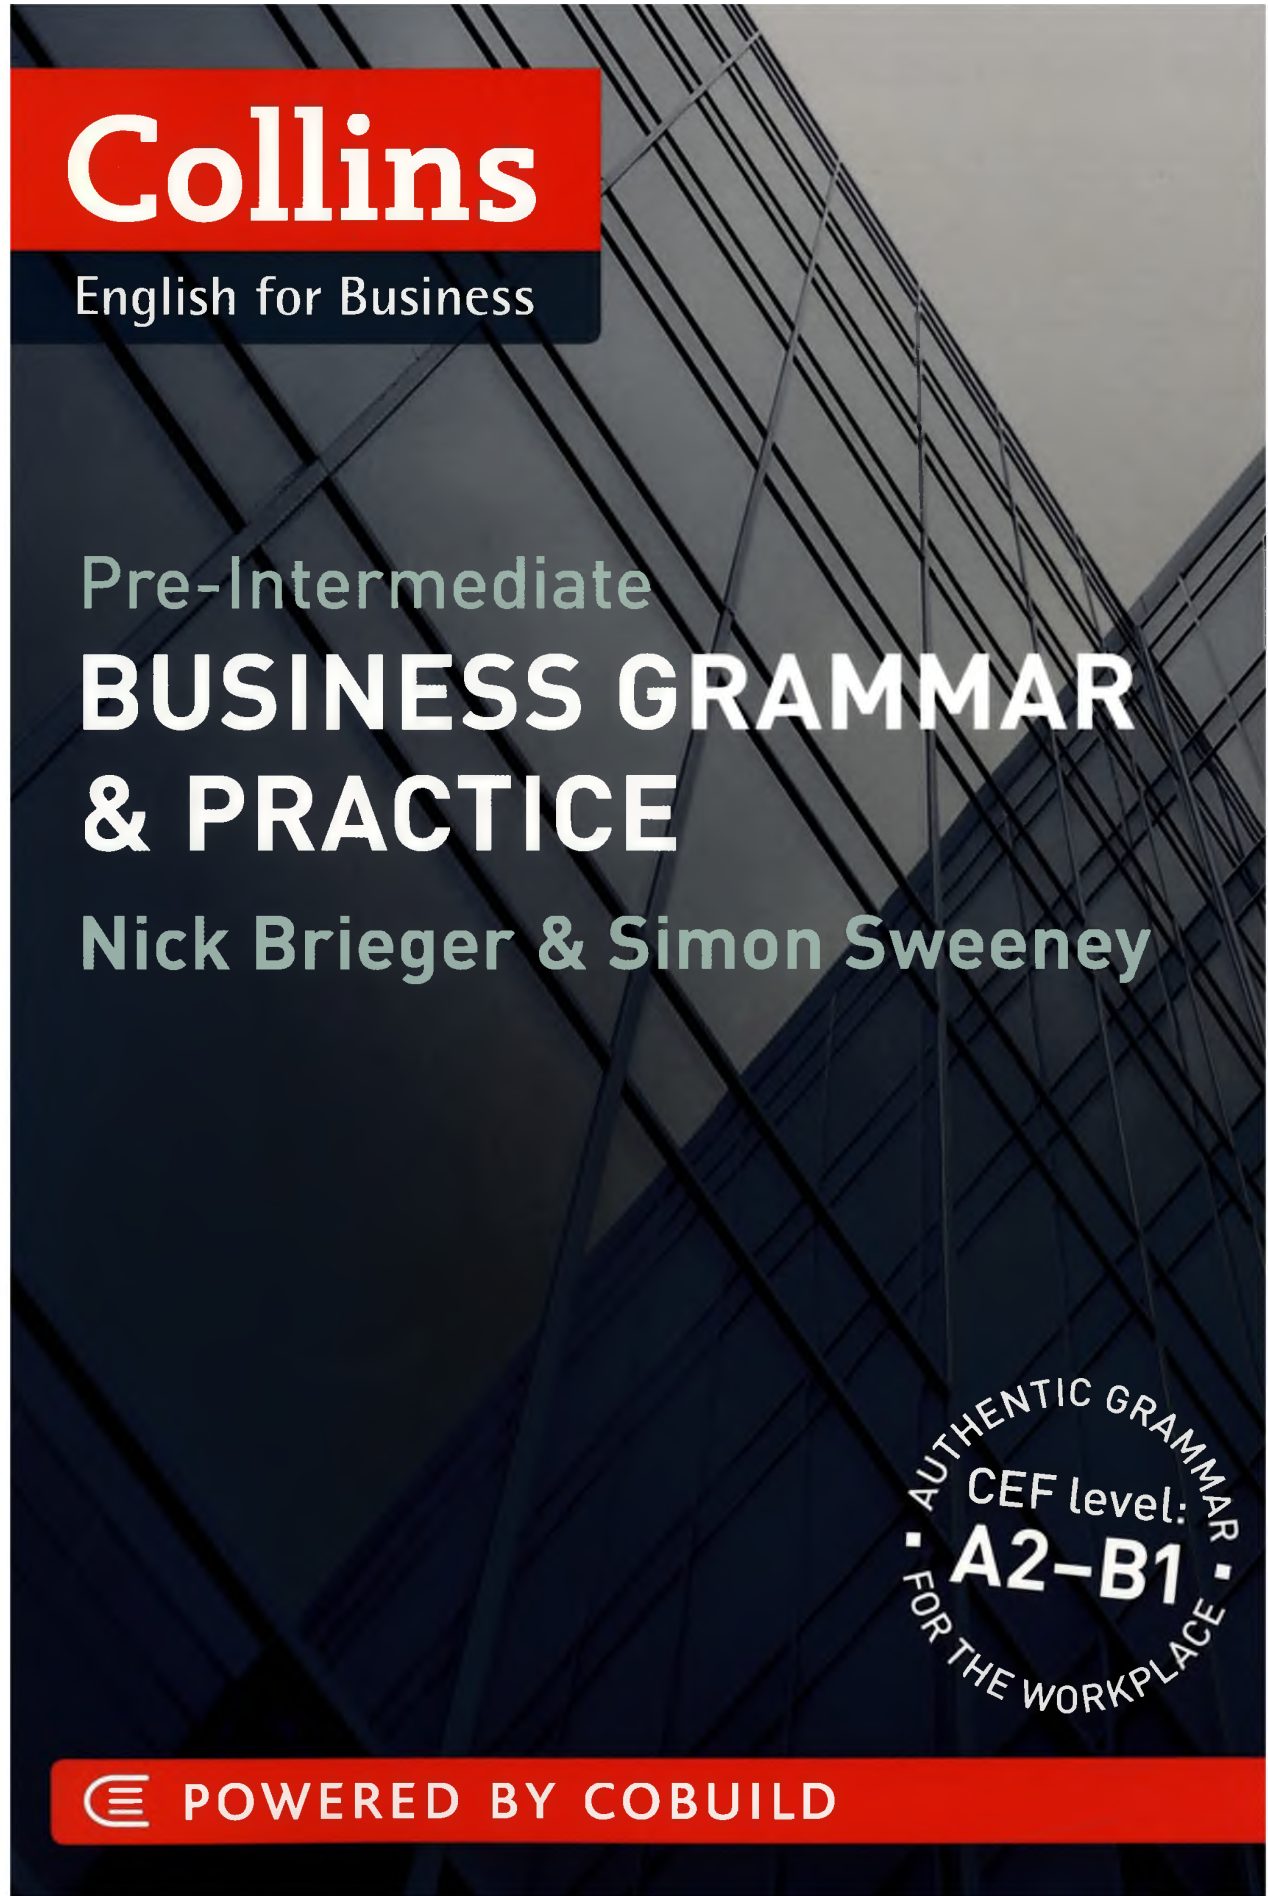 Collins-Business-Grammar-Practice-Pre-Intermediate